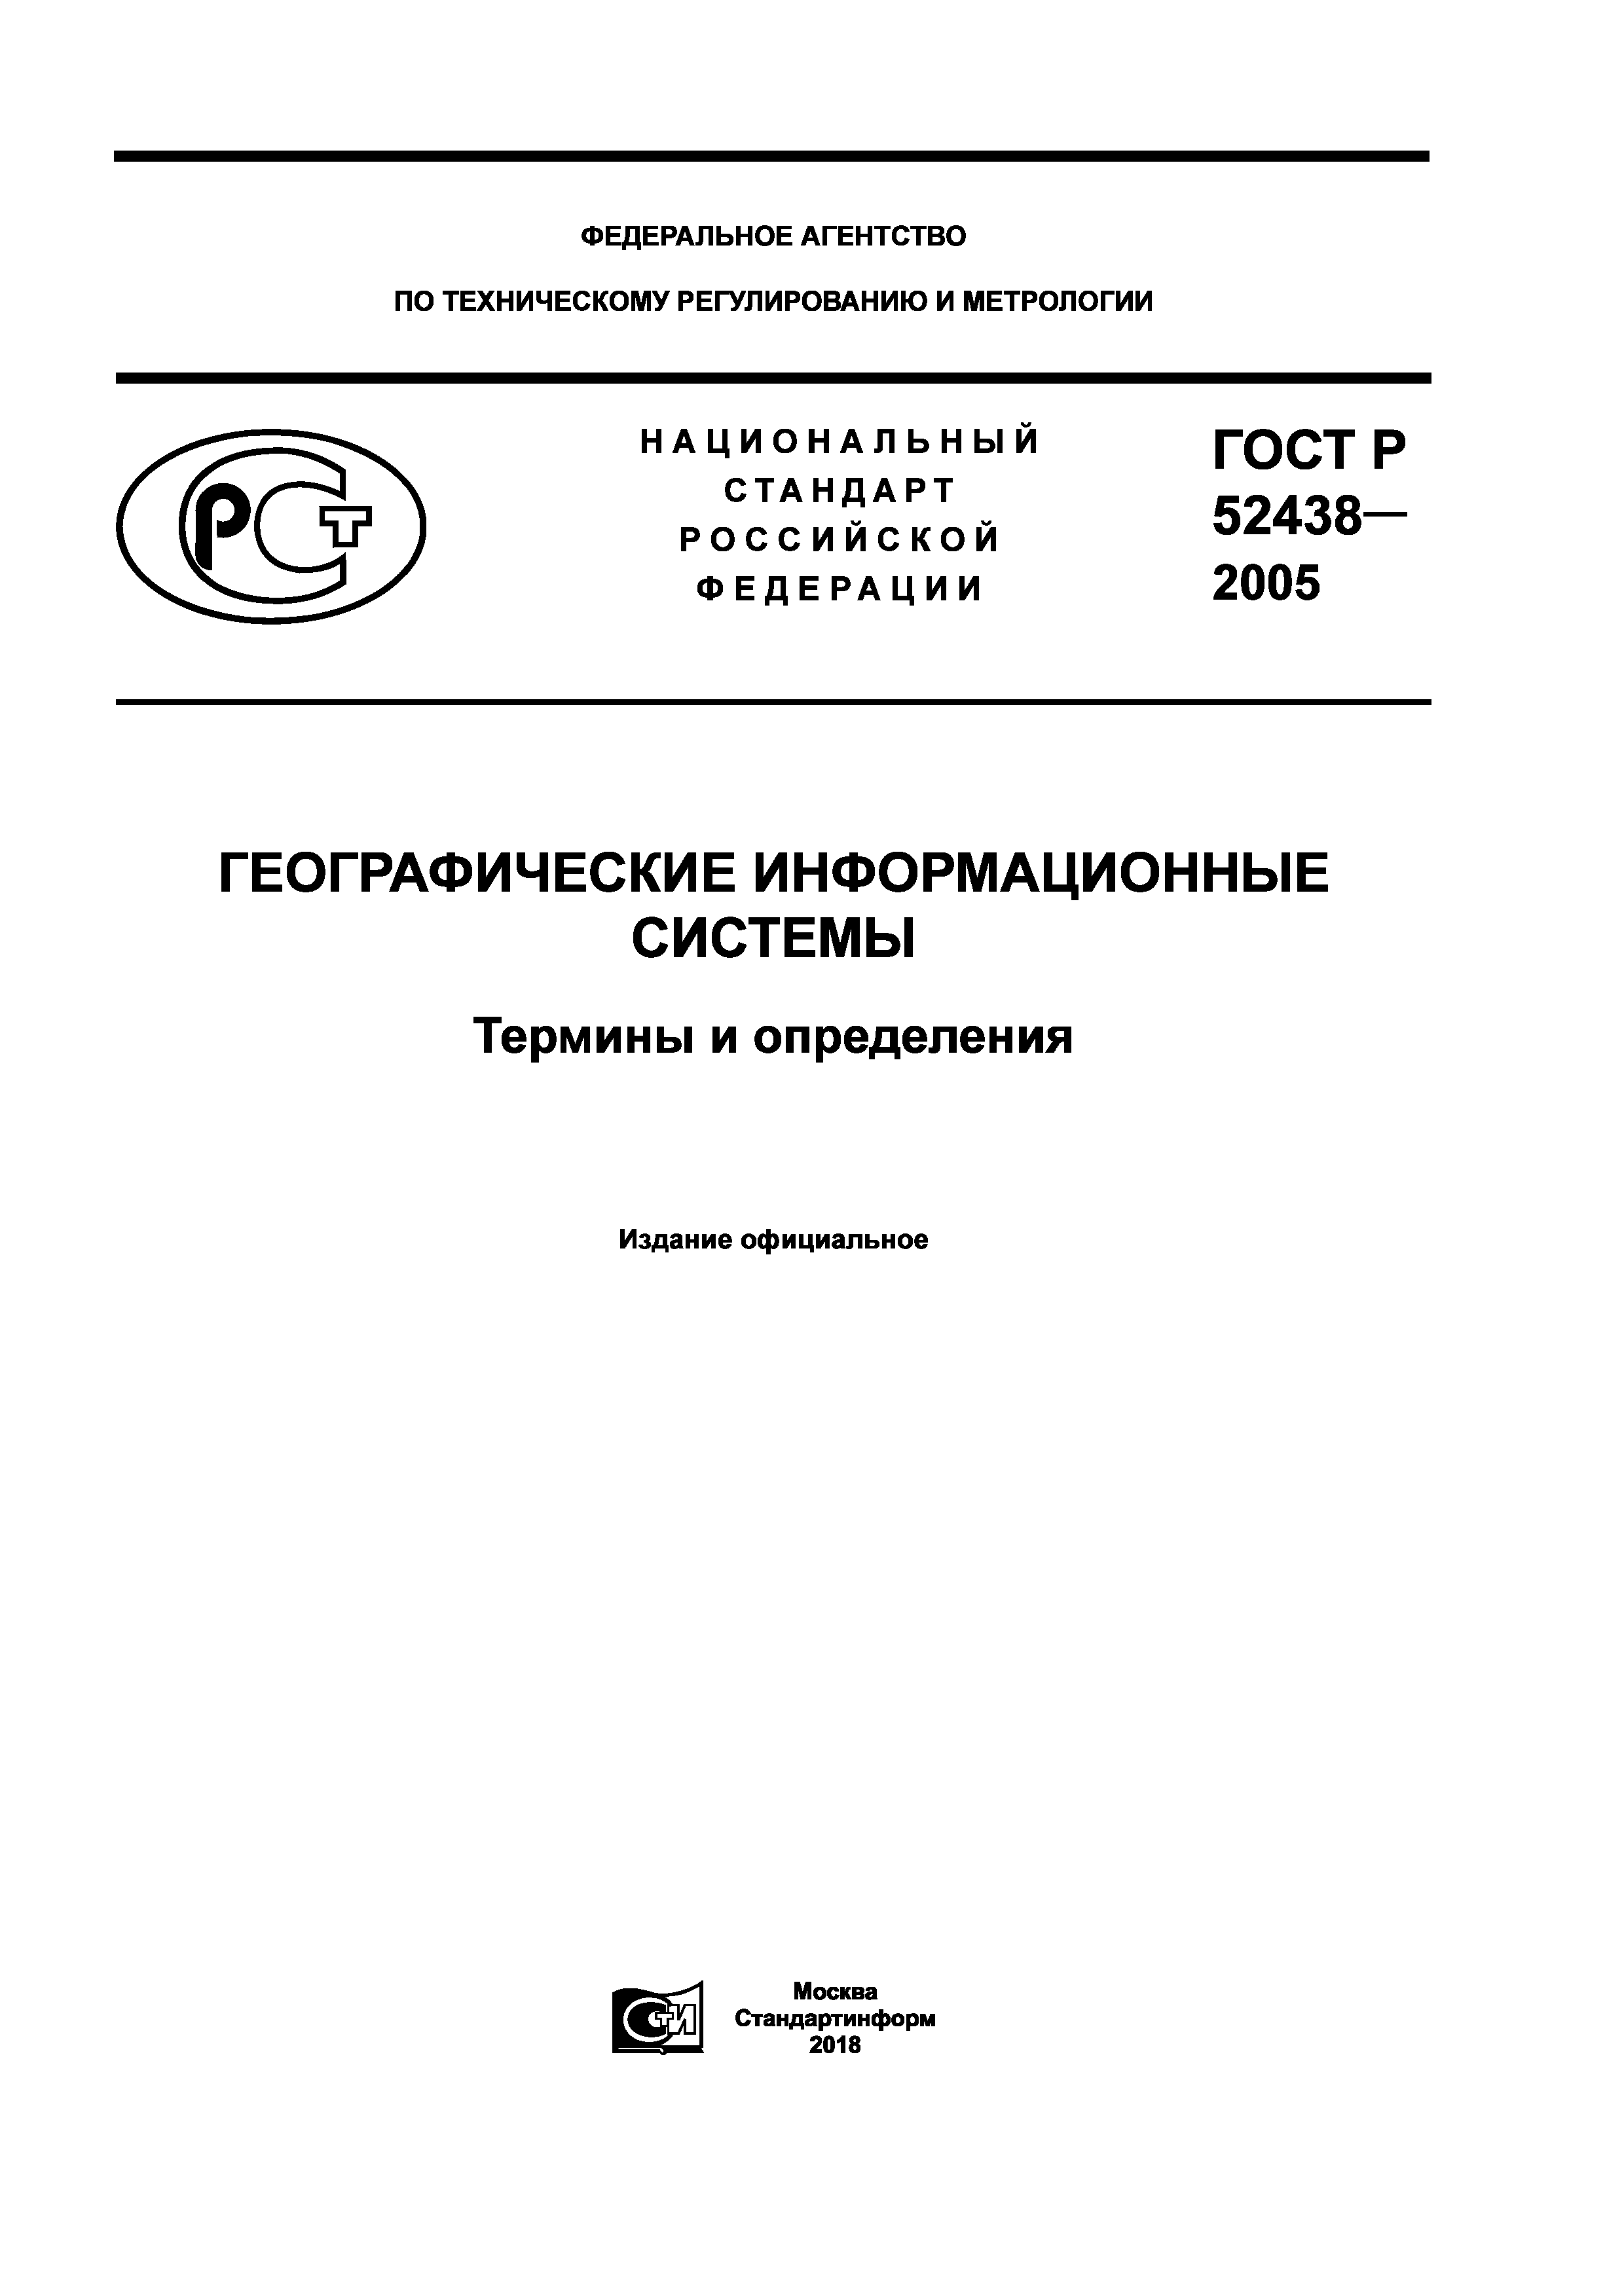 ГОСТ Р 52438-2005